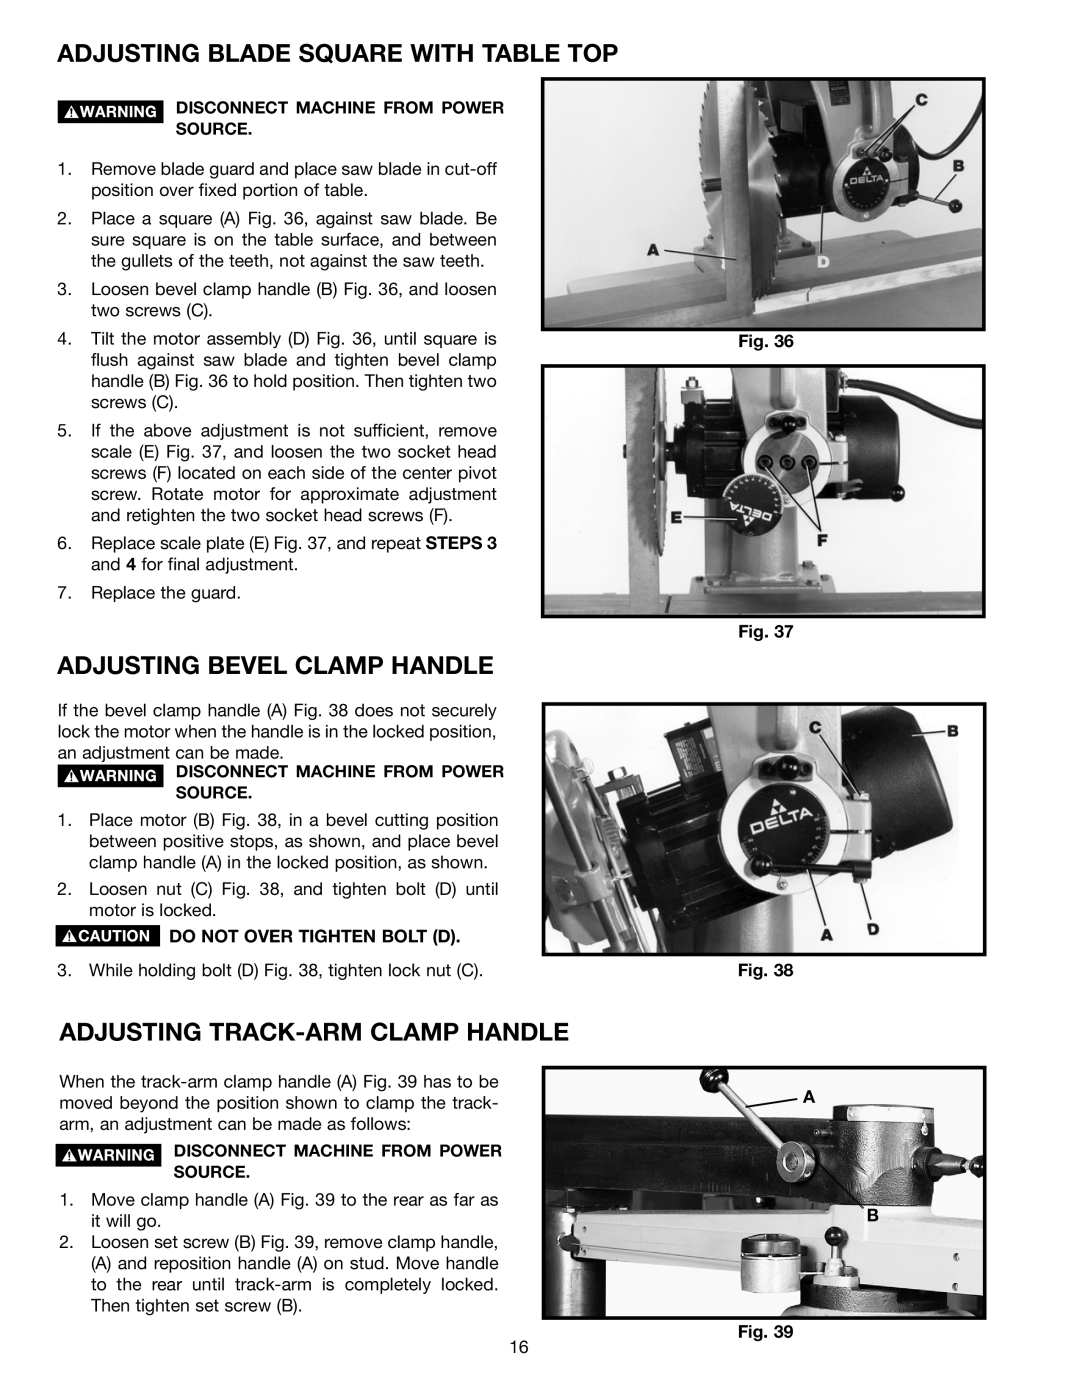 Porter-Cable 33-422 Adjusting Blade Square With Table Top, Adjusting Bevel Clamp Handle, Adjusting Track-Arm Clamp Handle 